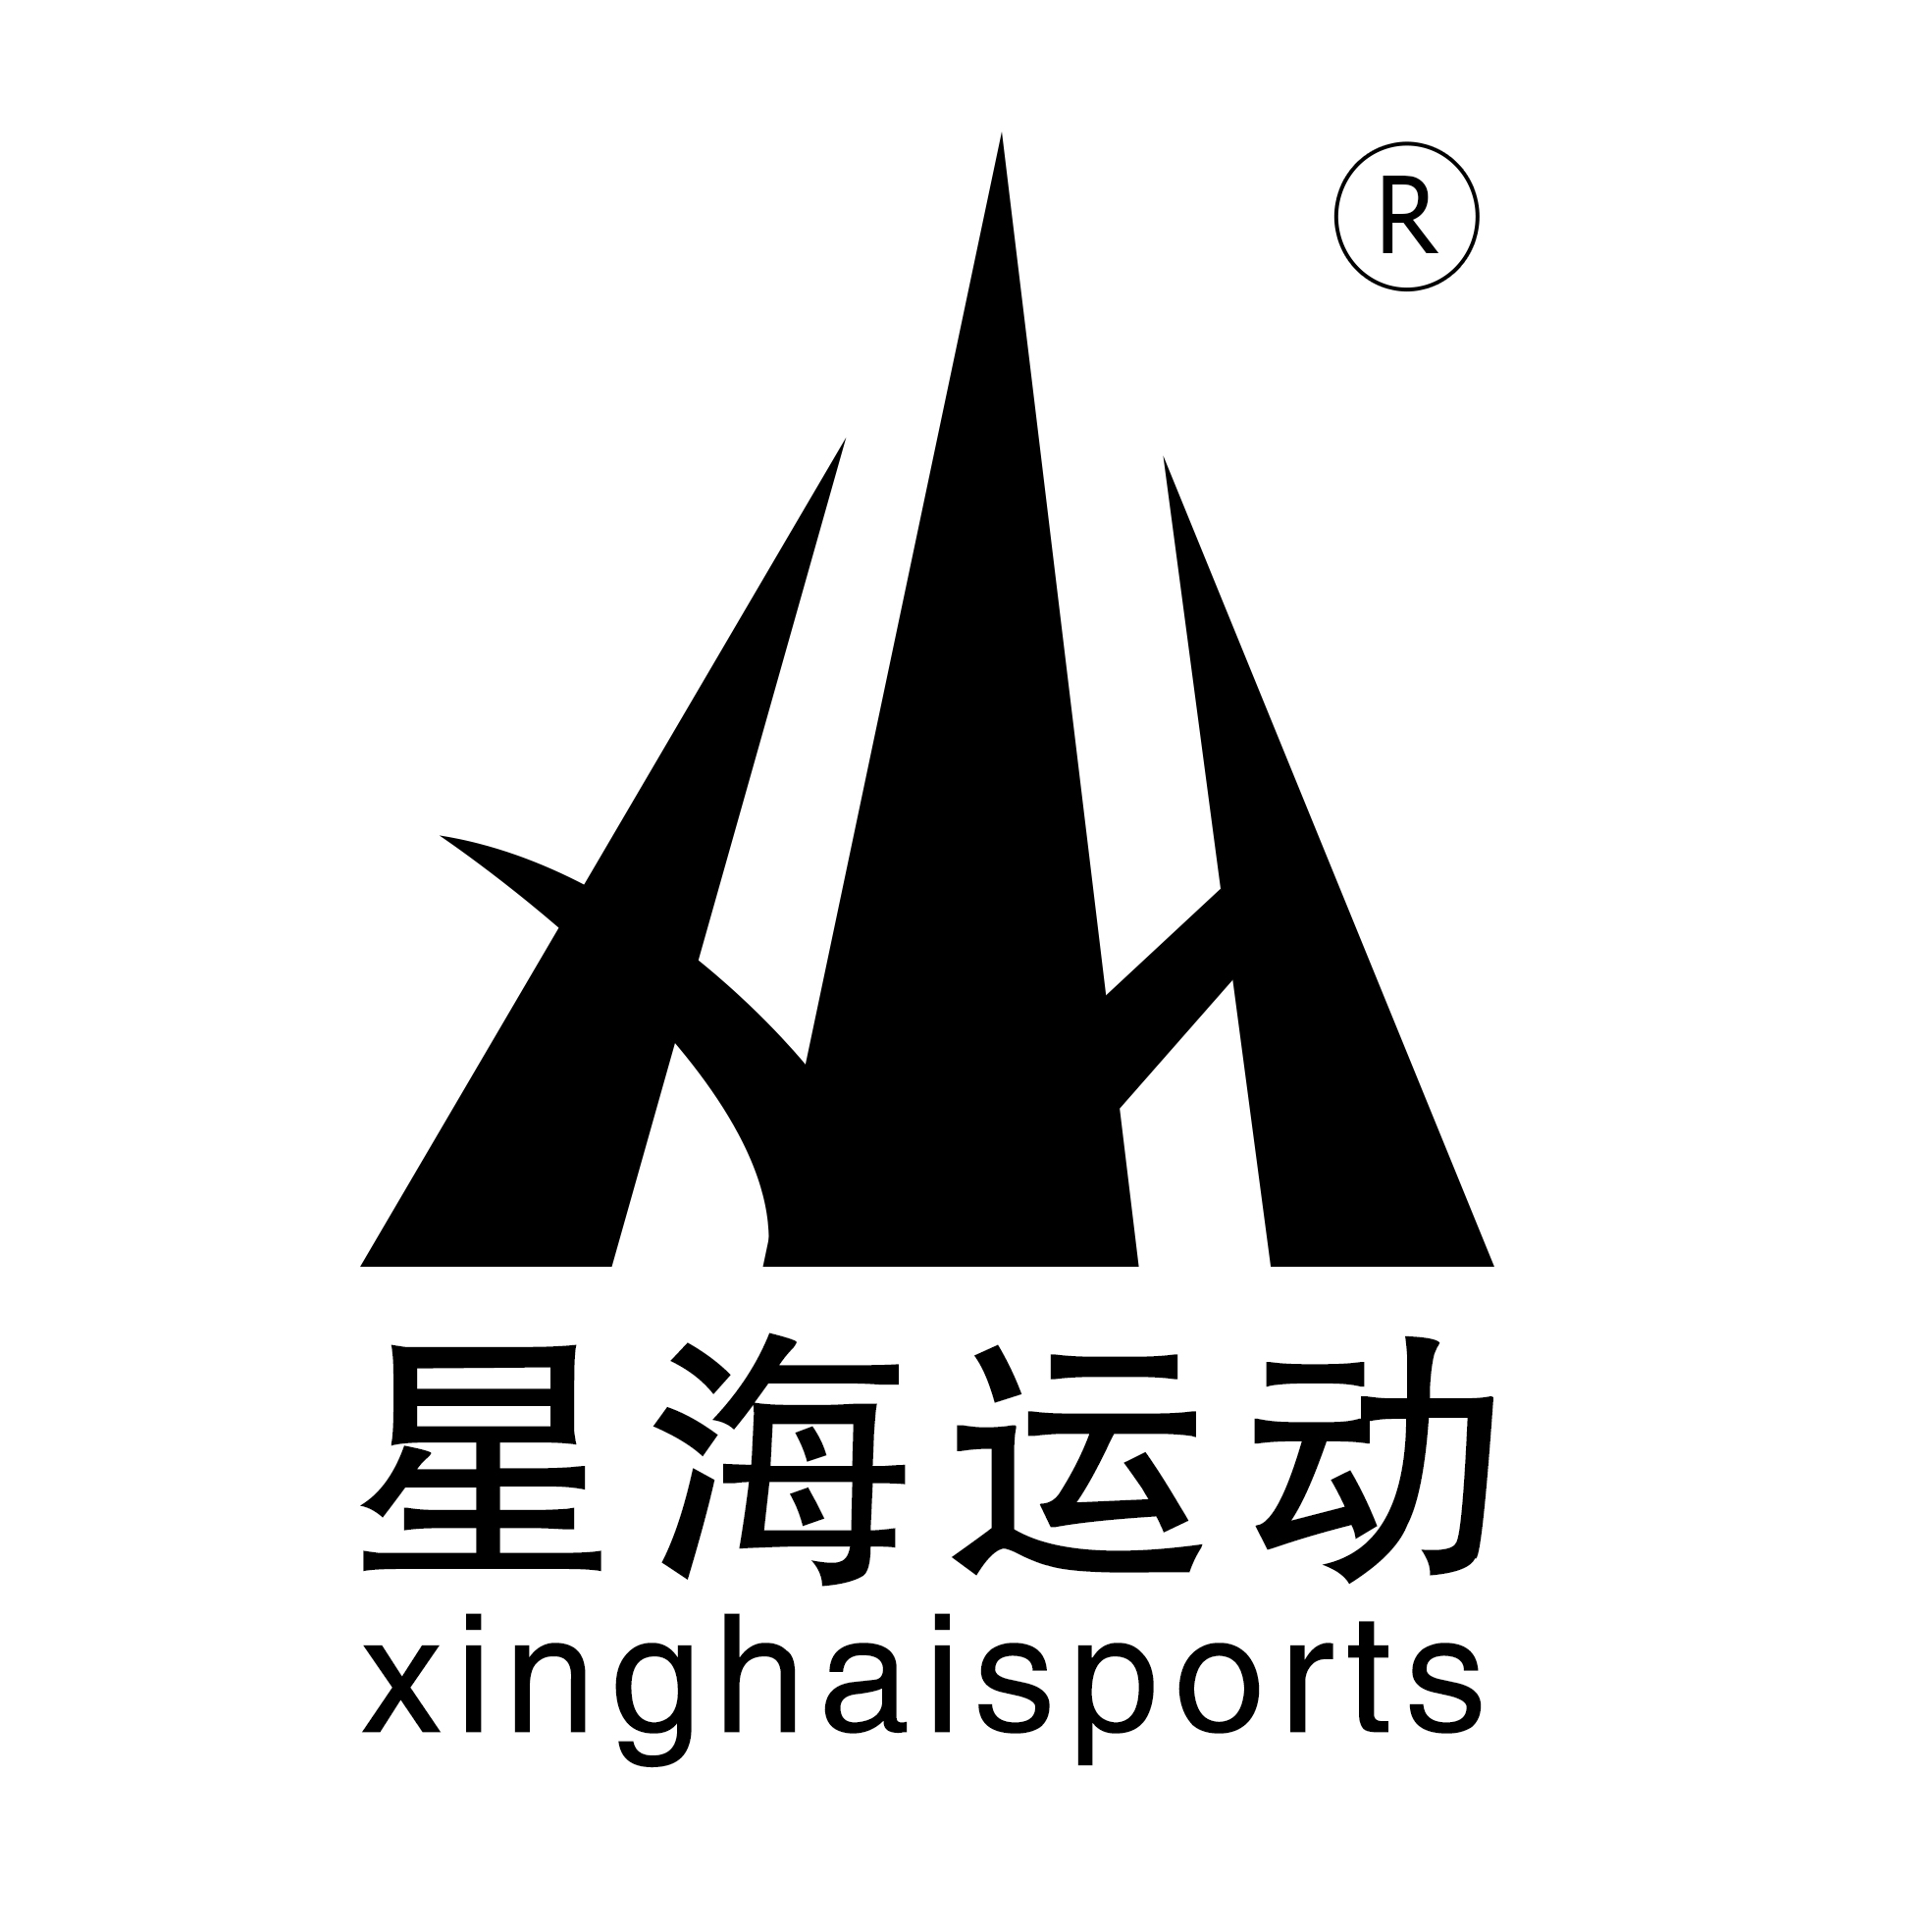 Hunan Xinghai Sports Co., Ltd.